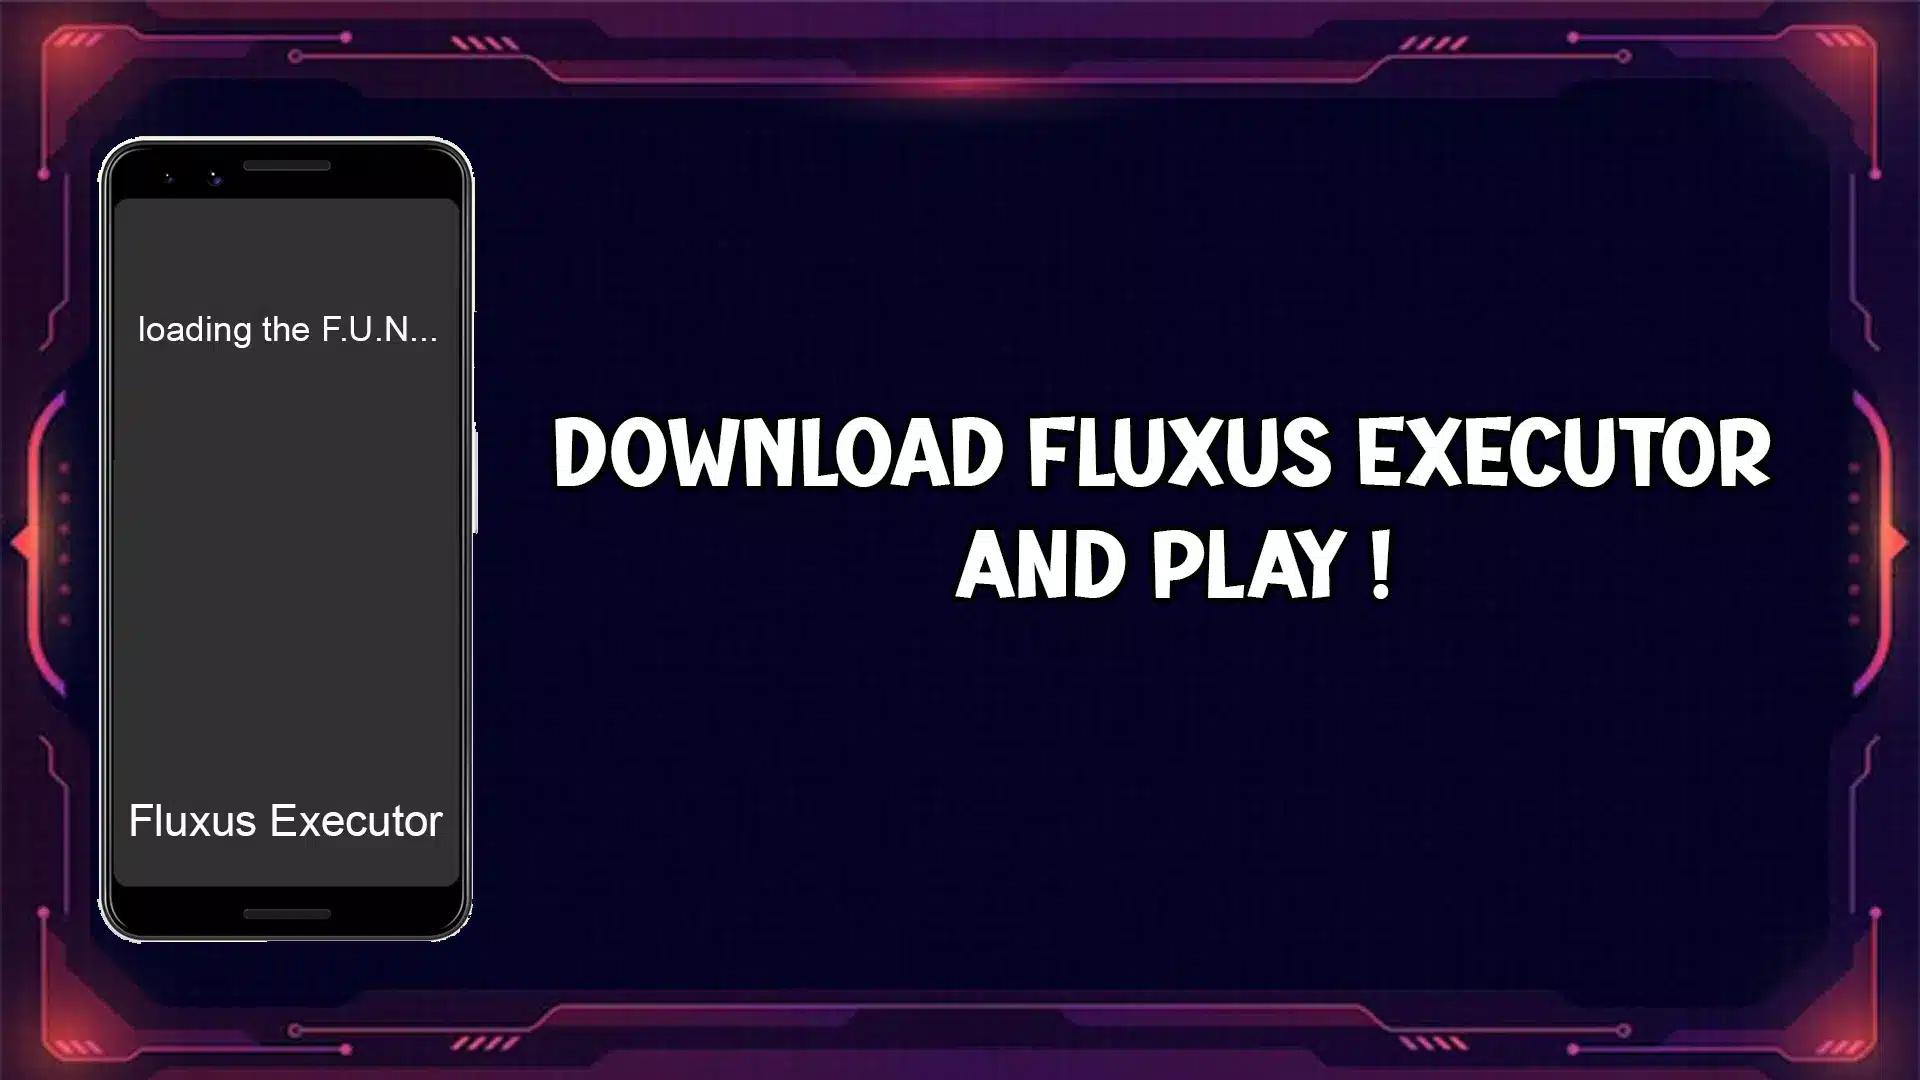 fluxus executor Image 8